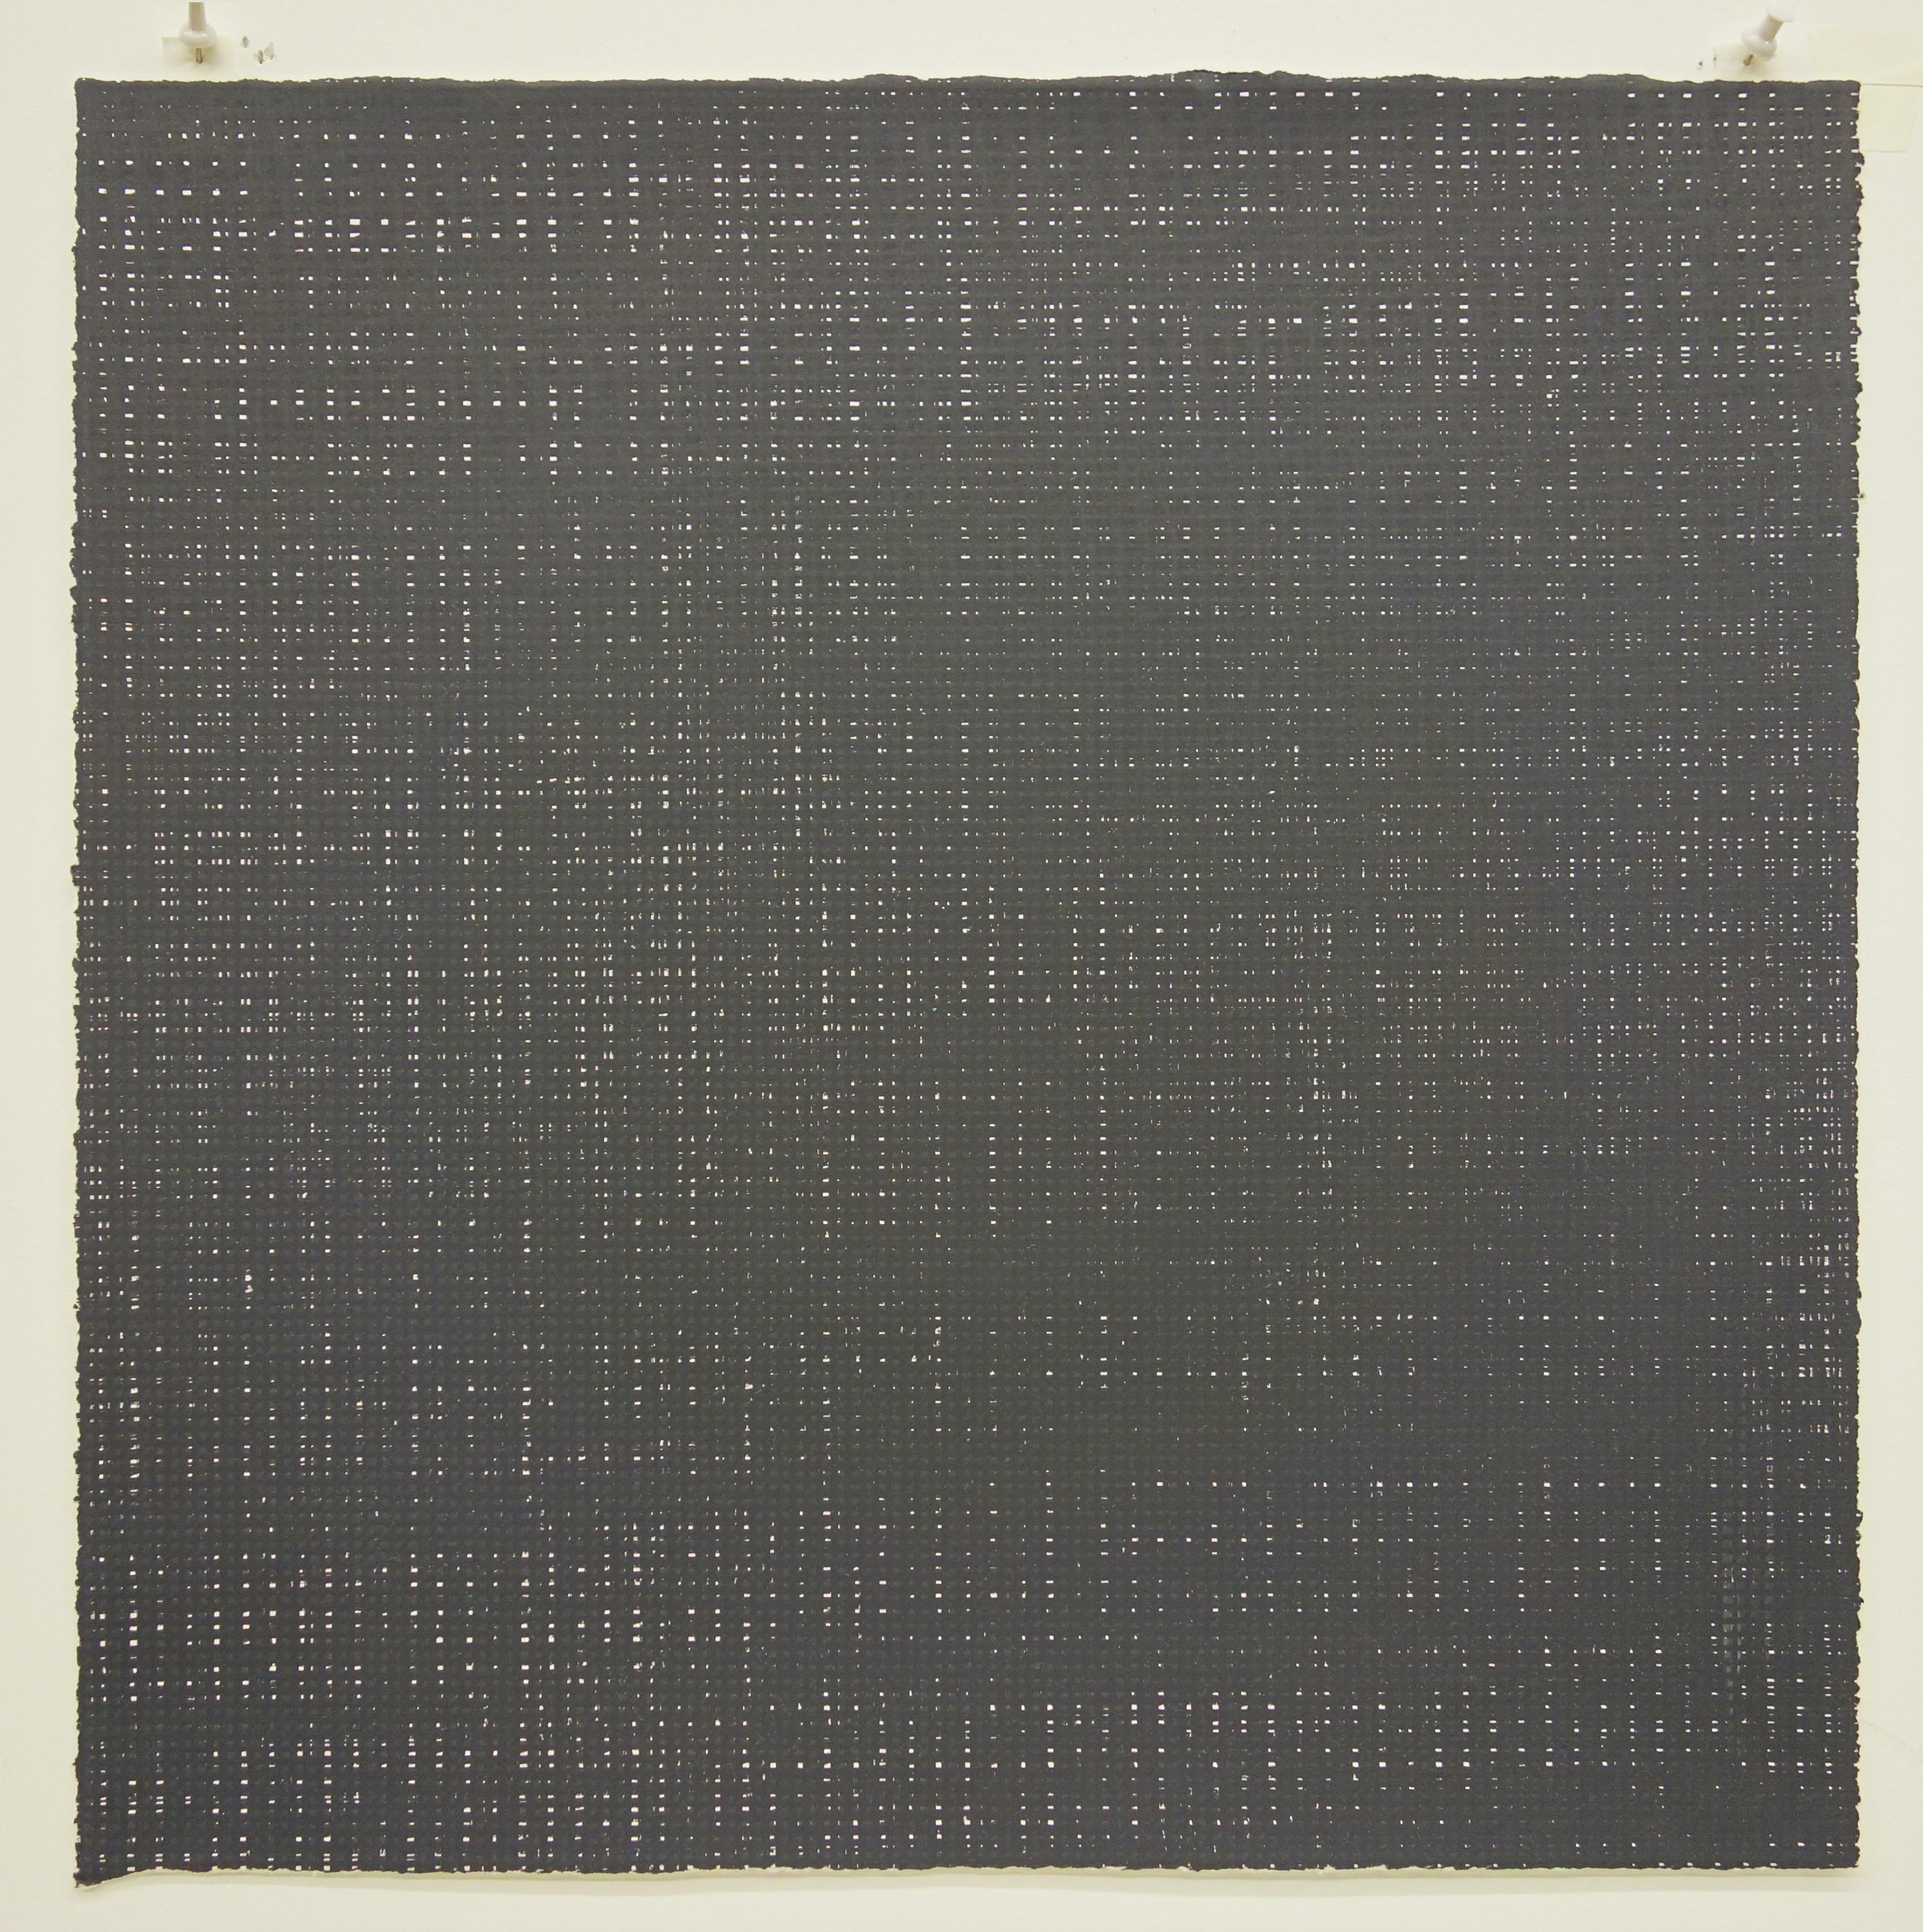 Rob de Oude, Untitled-Wassaic 1, 2016, silkscreen, 18 x 18 inches, Suite of 10 8